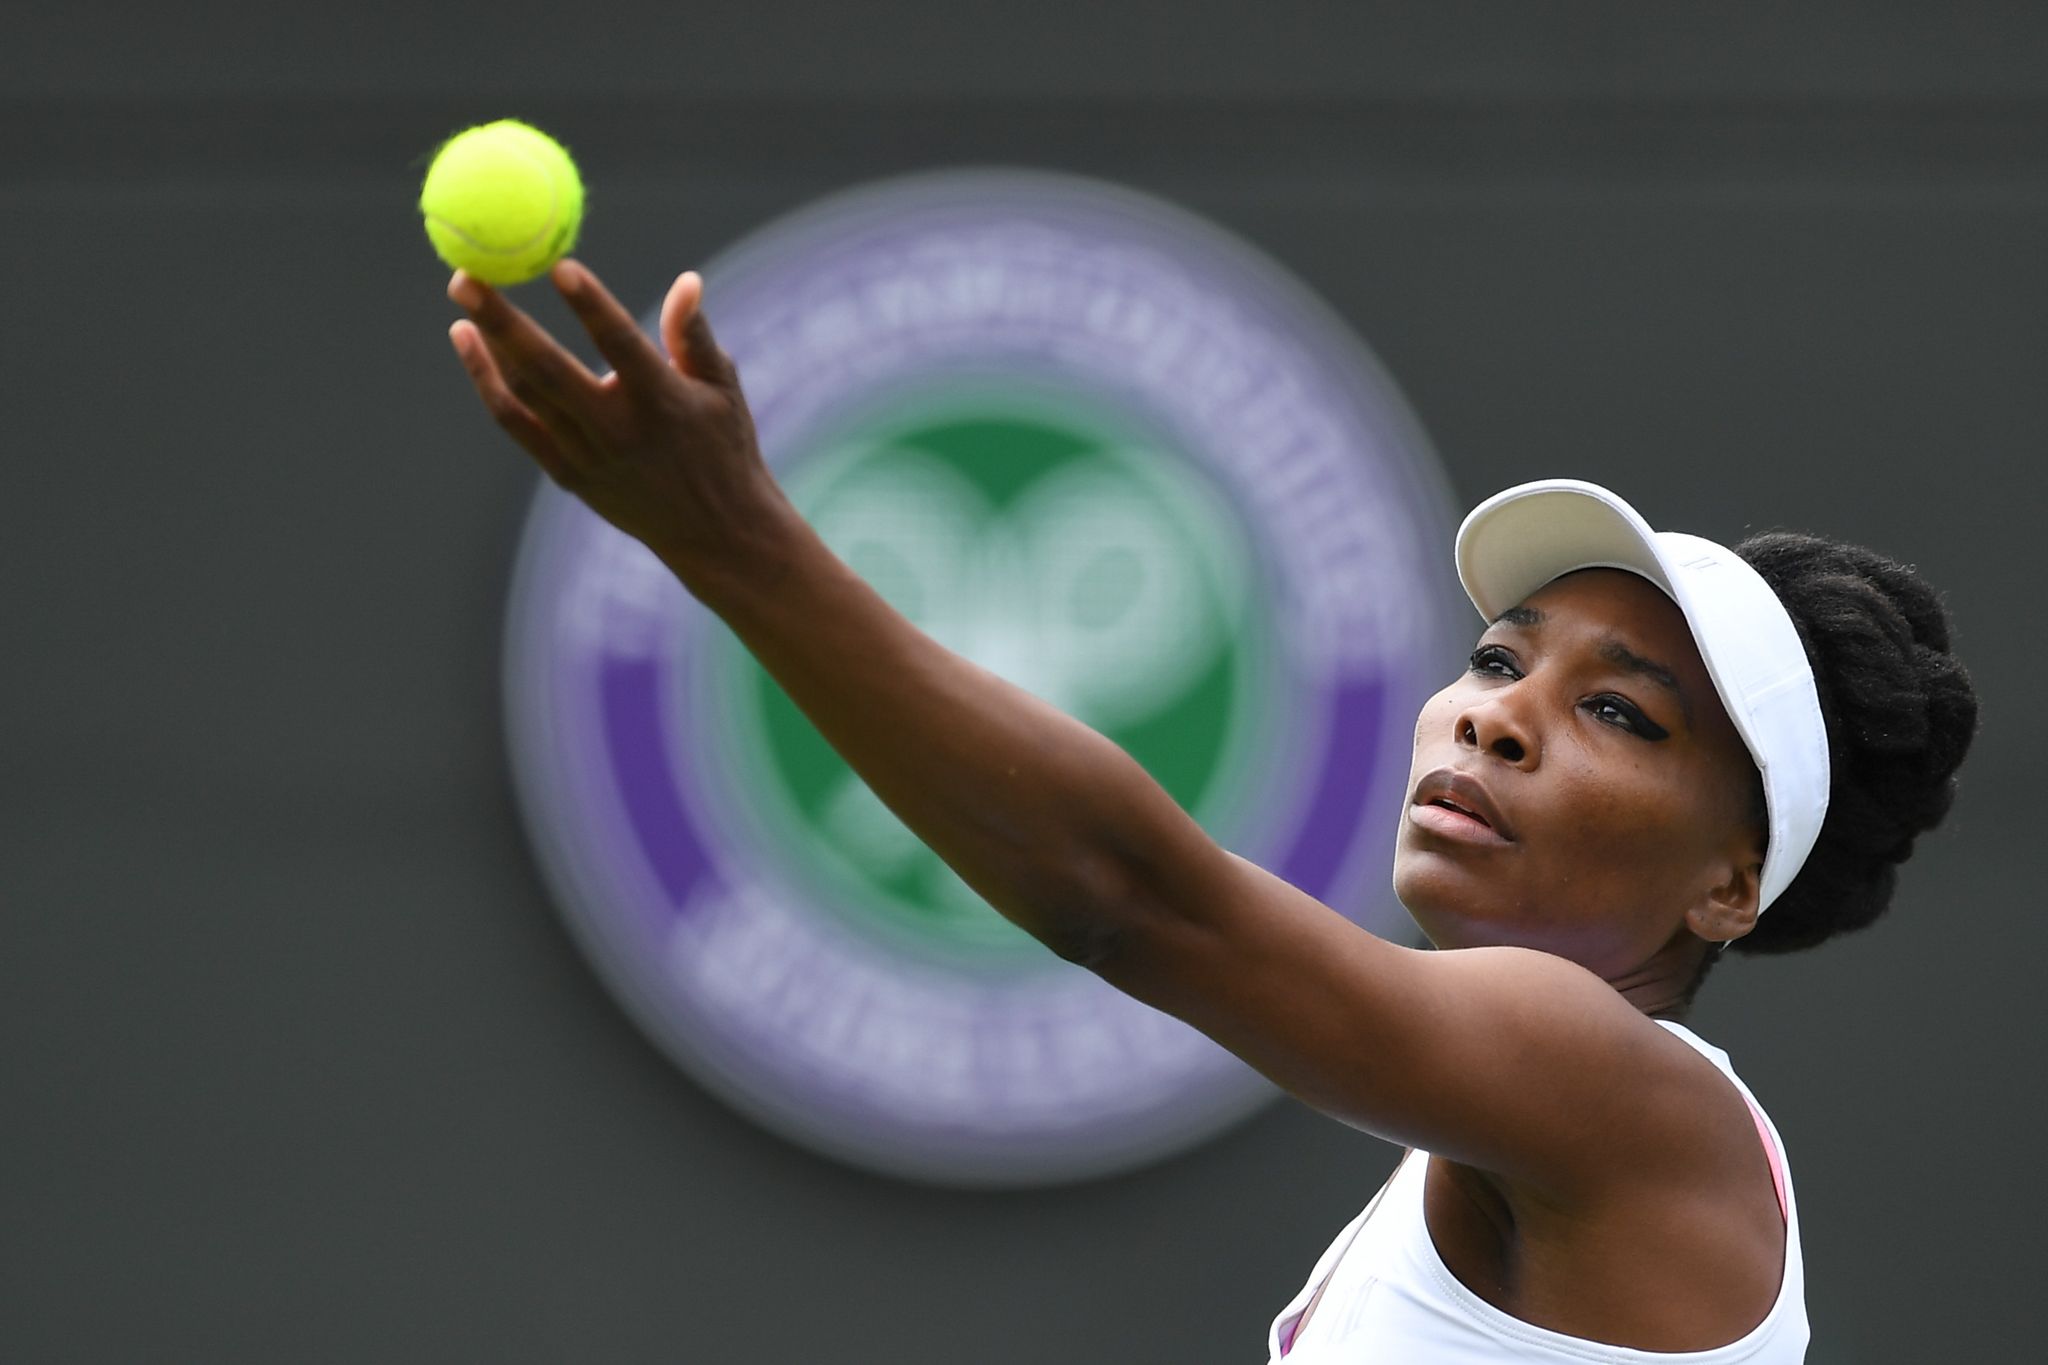 Venus Williams at Wimbledon